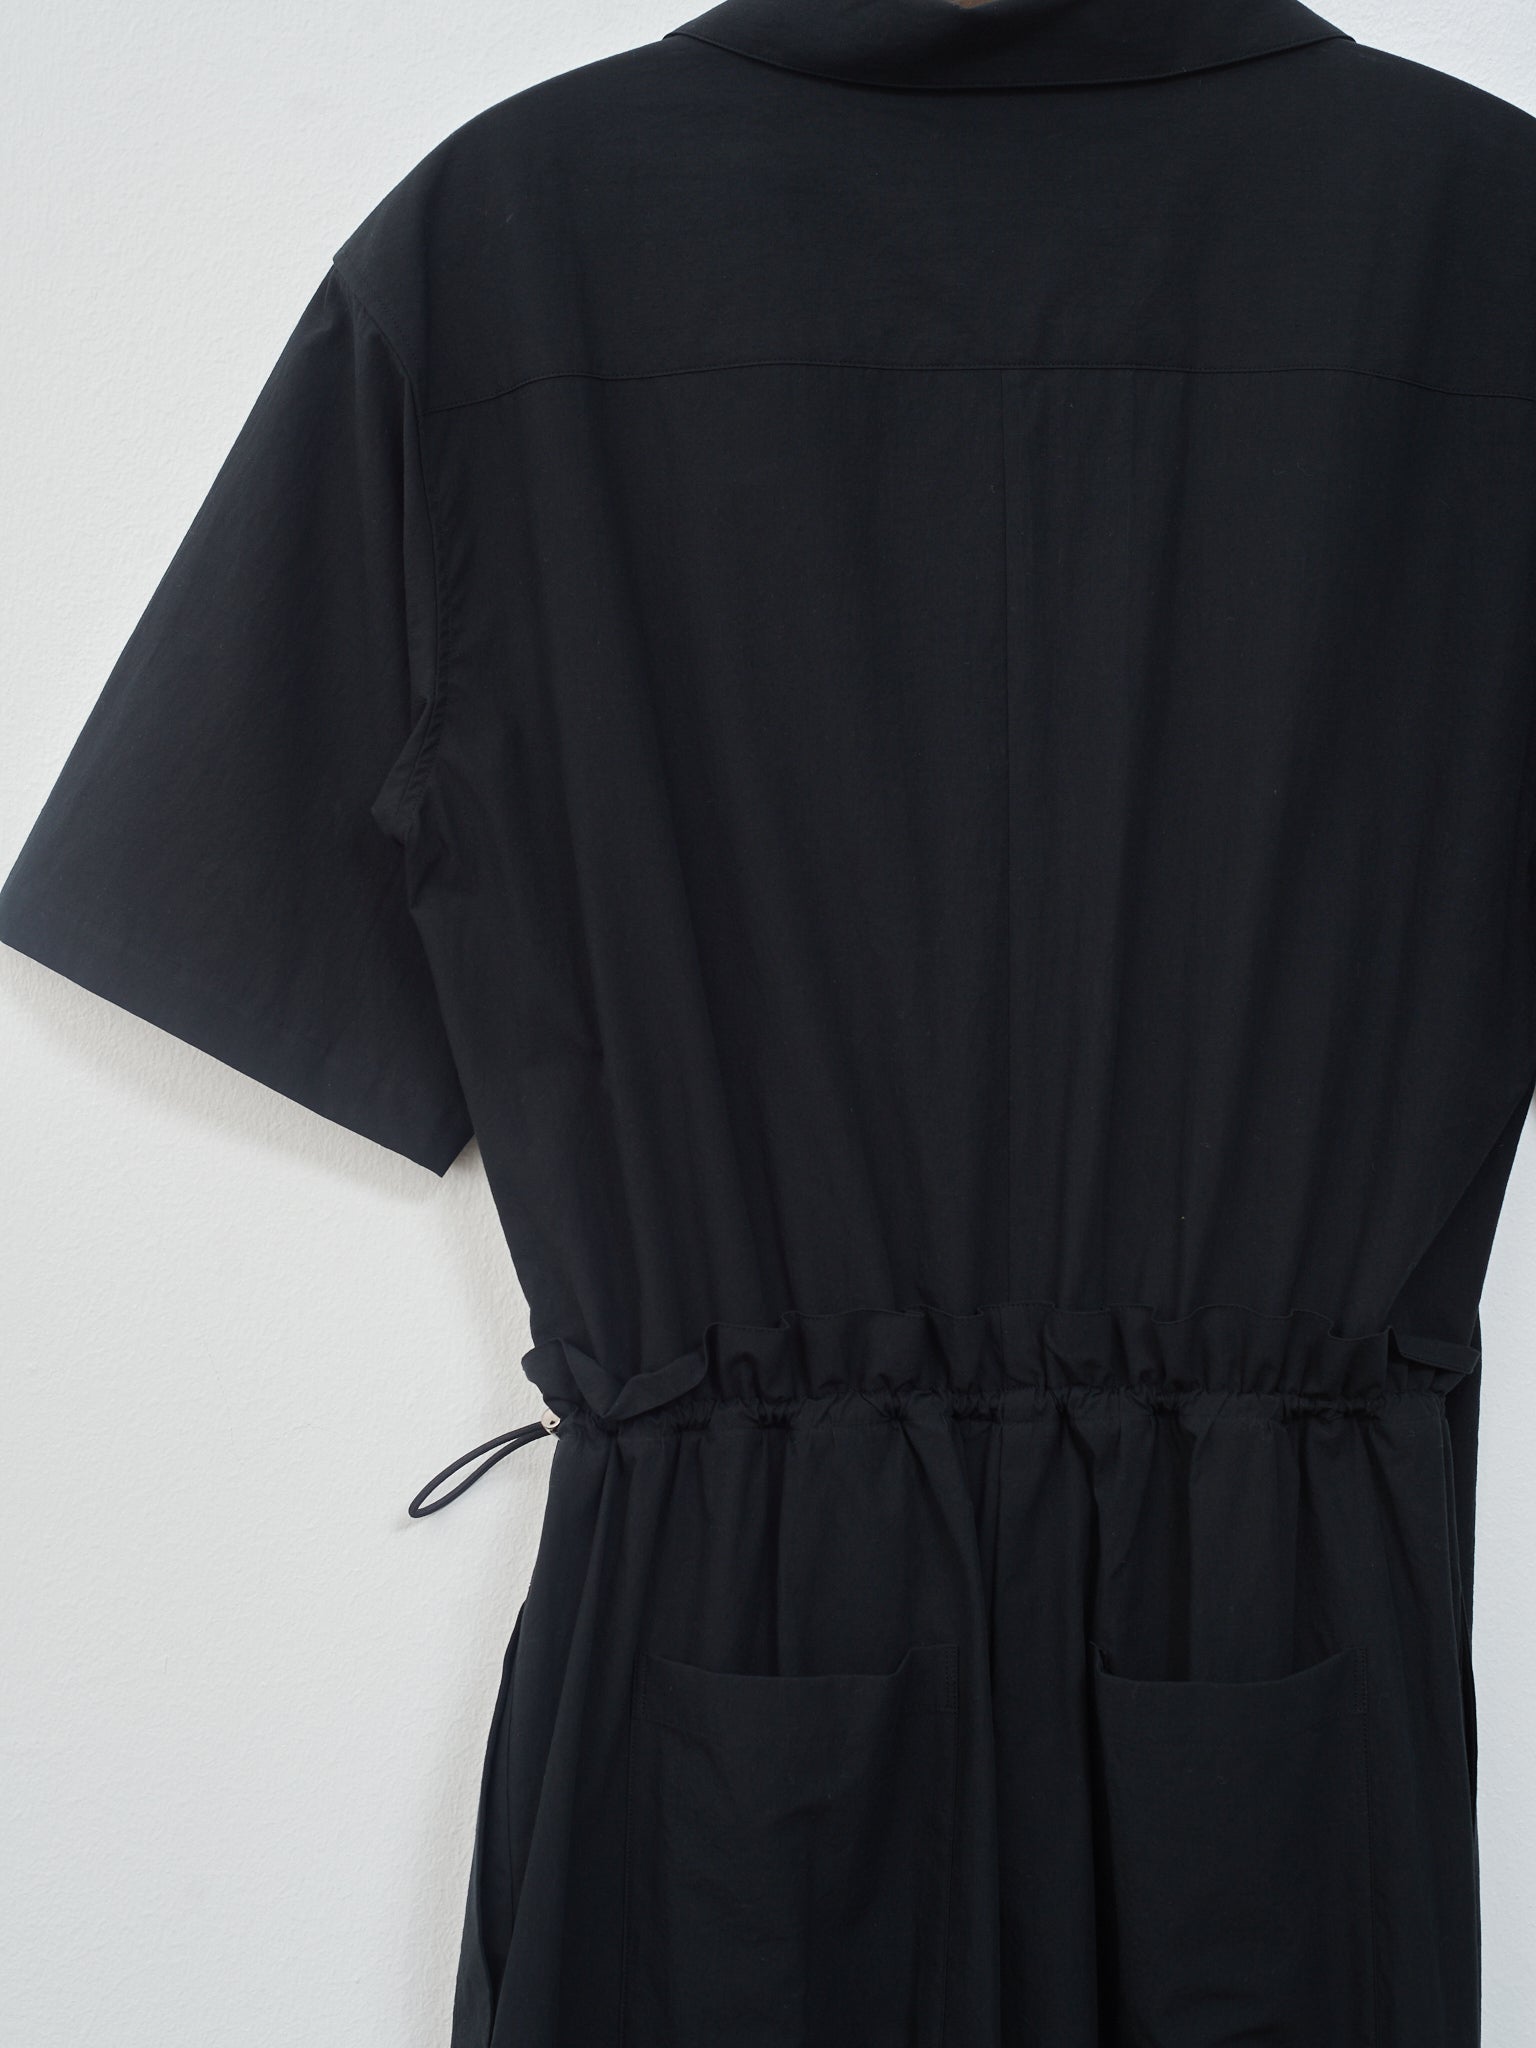 Namu Shop - Sayaka Davis Open Collar Jumpsuit - Black